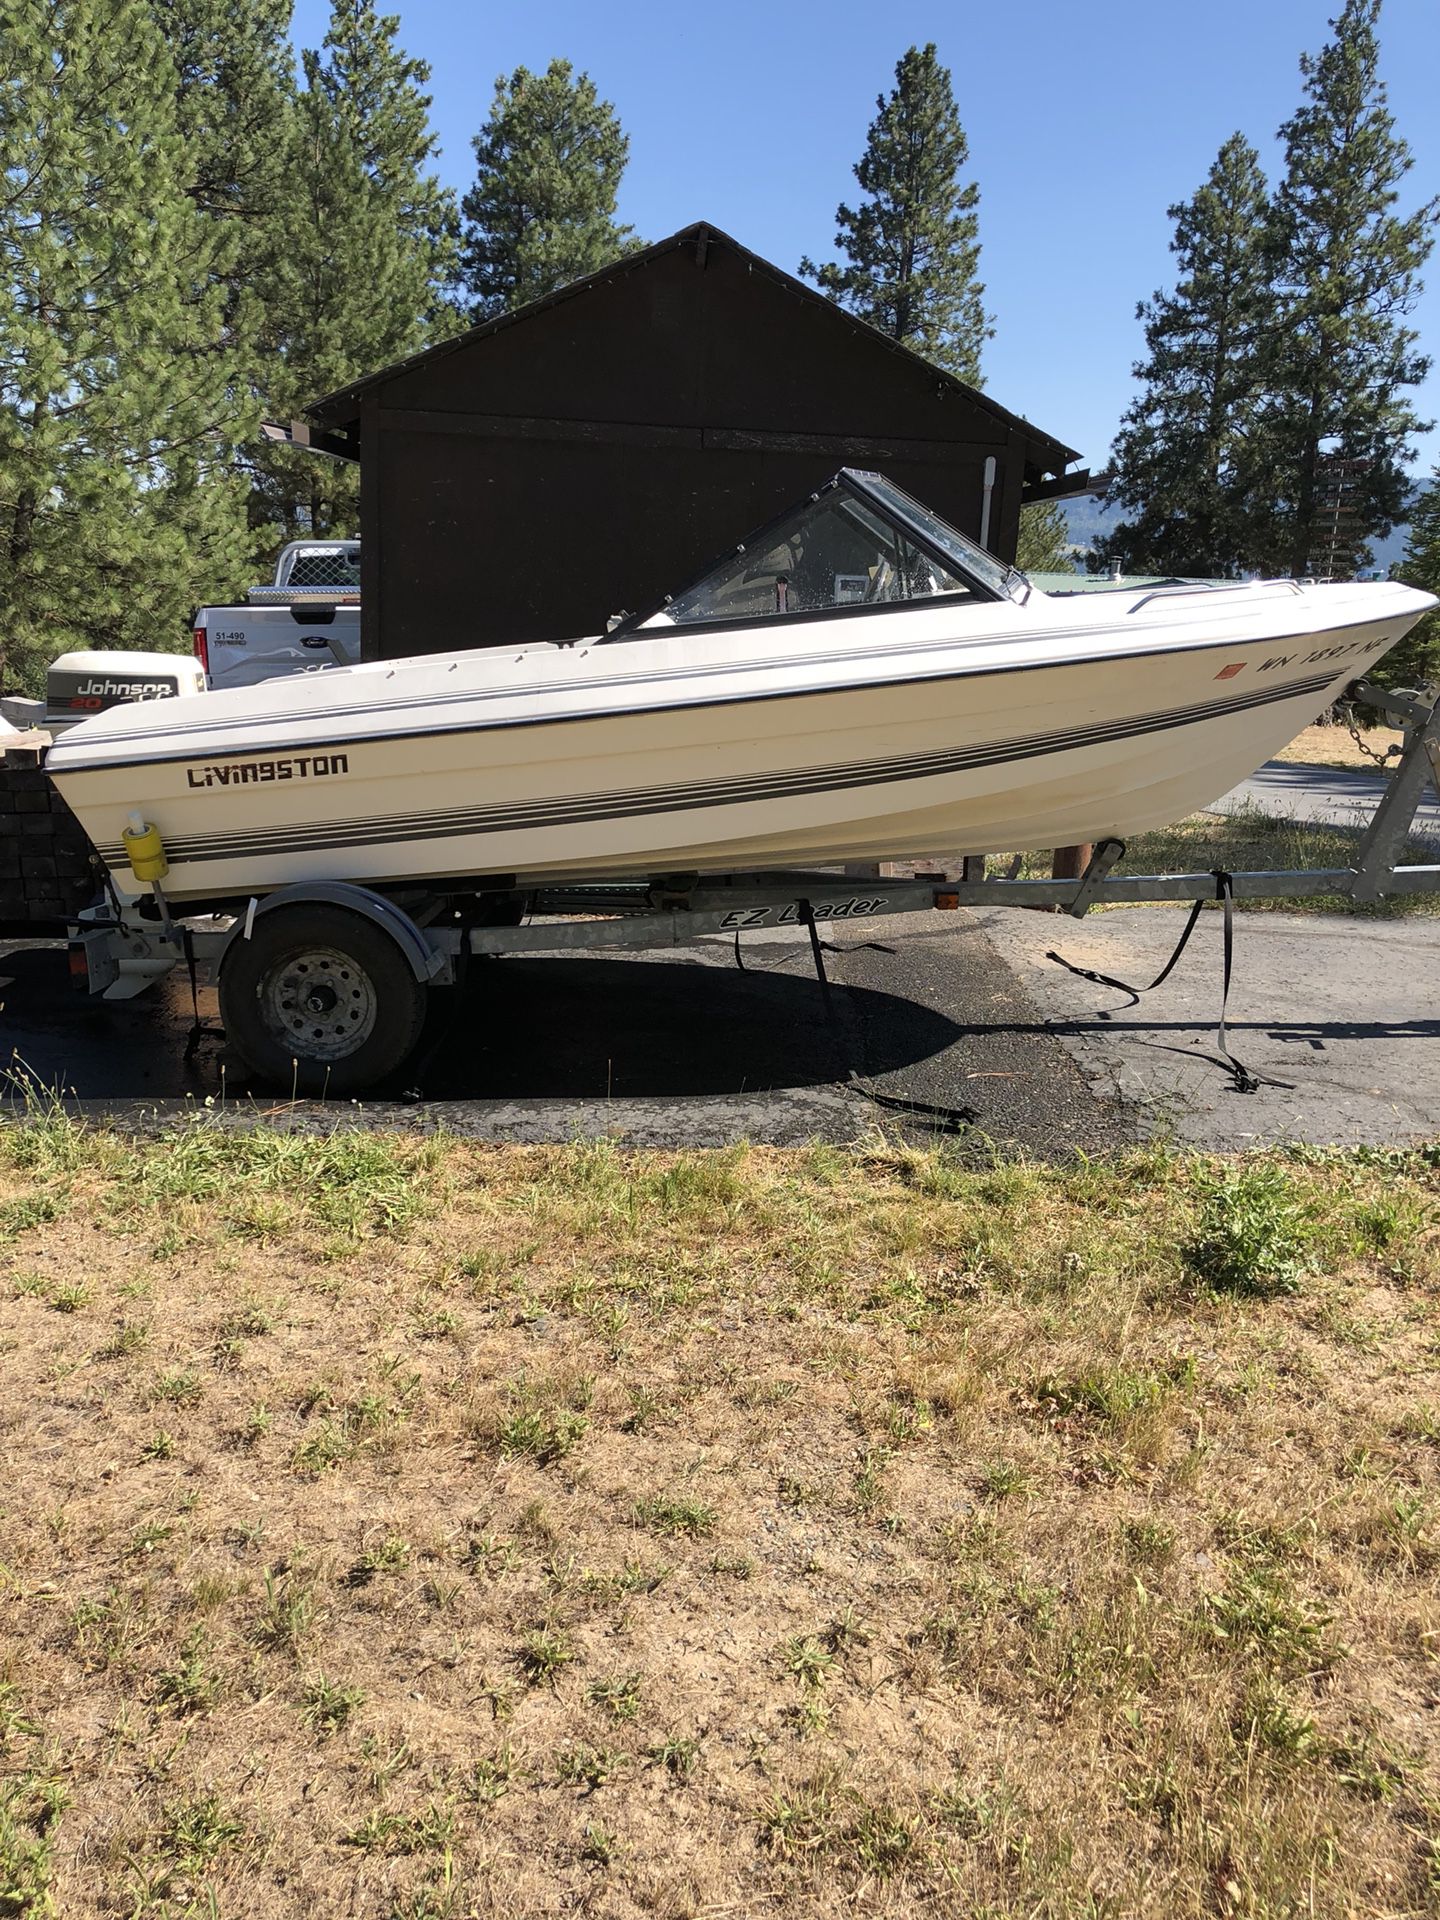 Livingston 16’ fiberglass boat $4000 obo